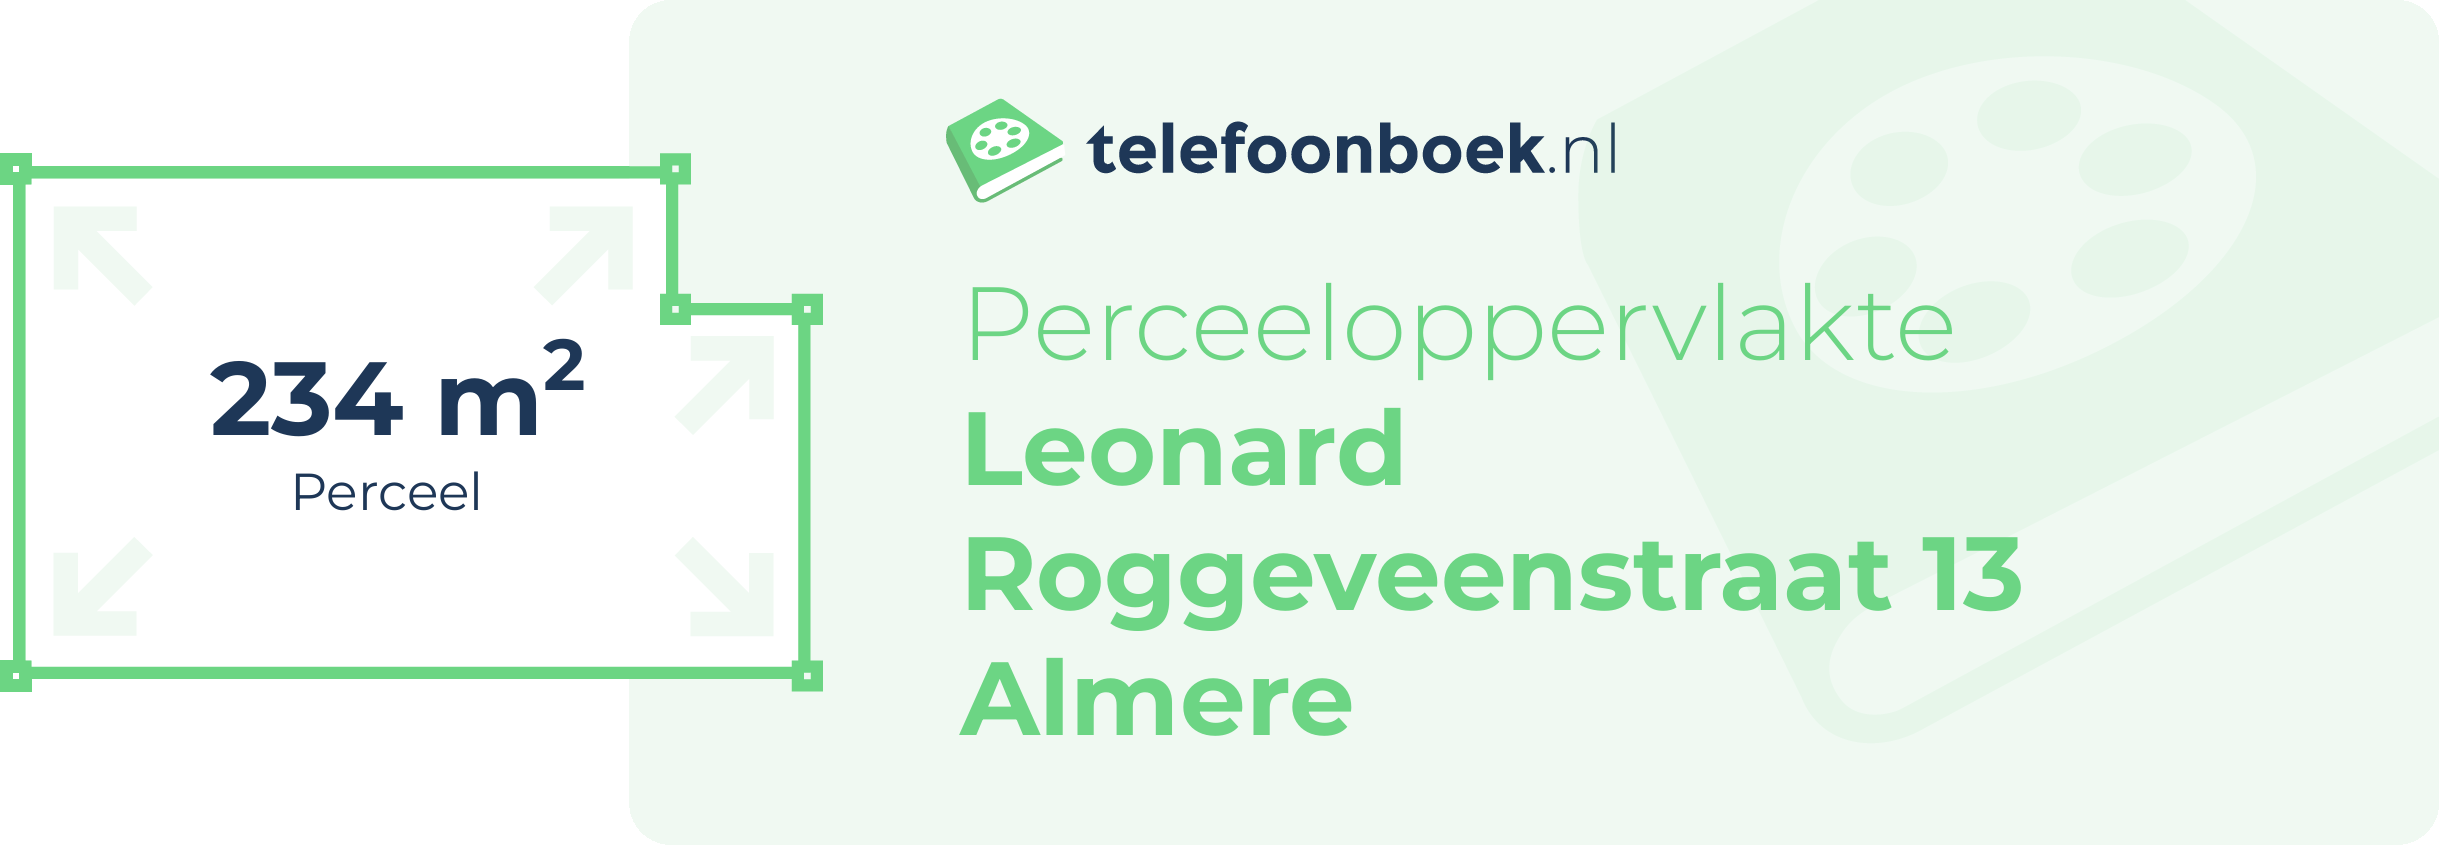 Perceeloppervlakte Leonard Roggeveenstraat 13 Almere